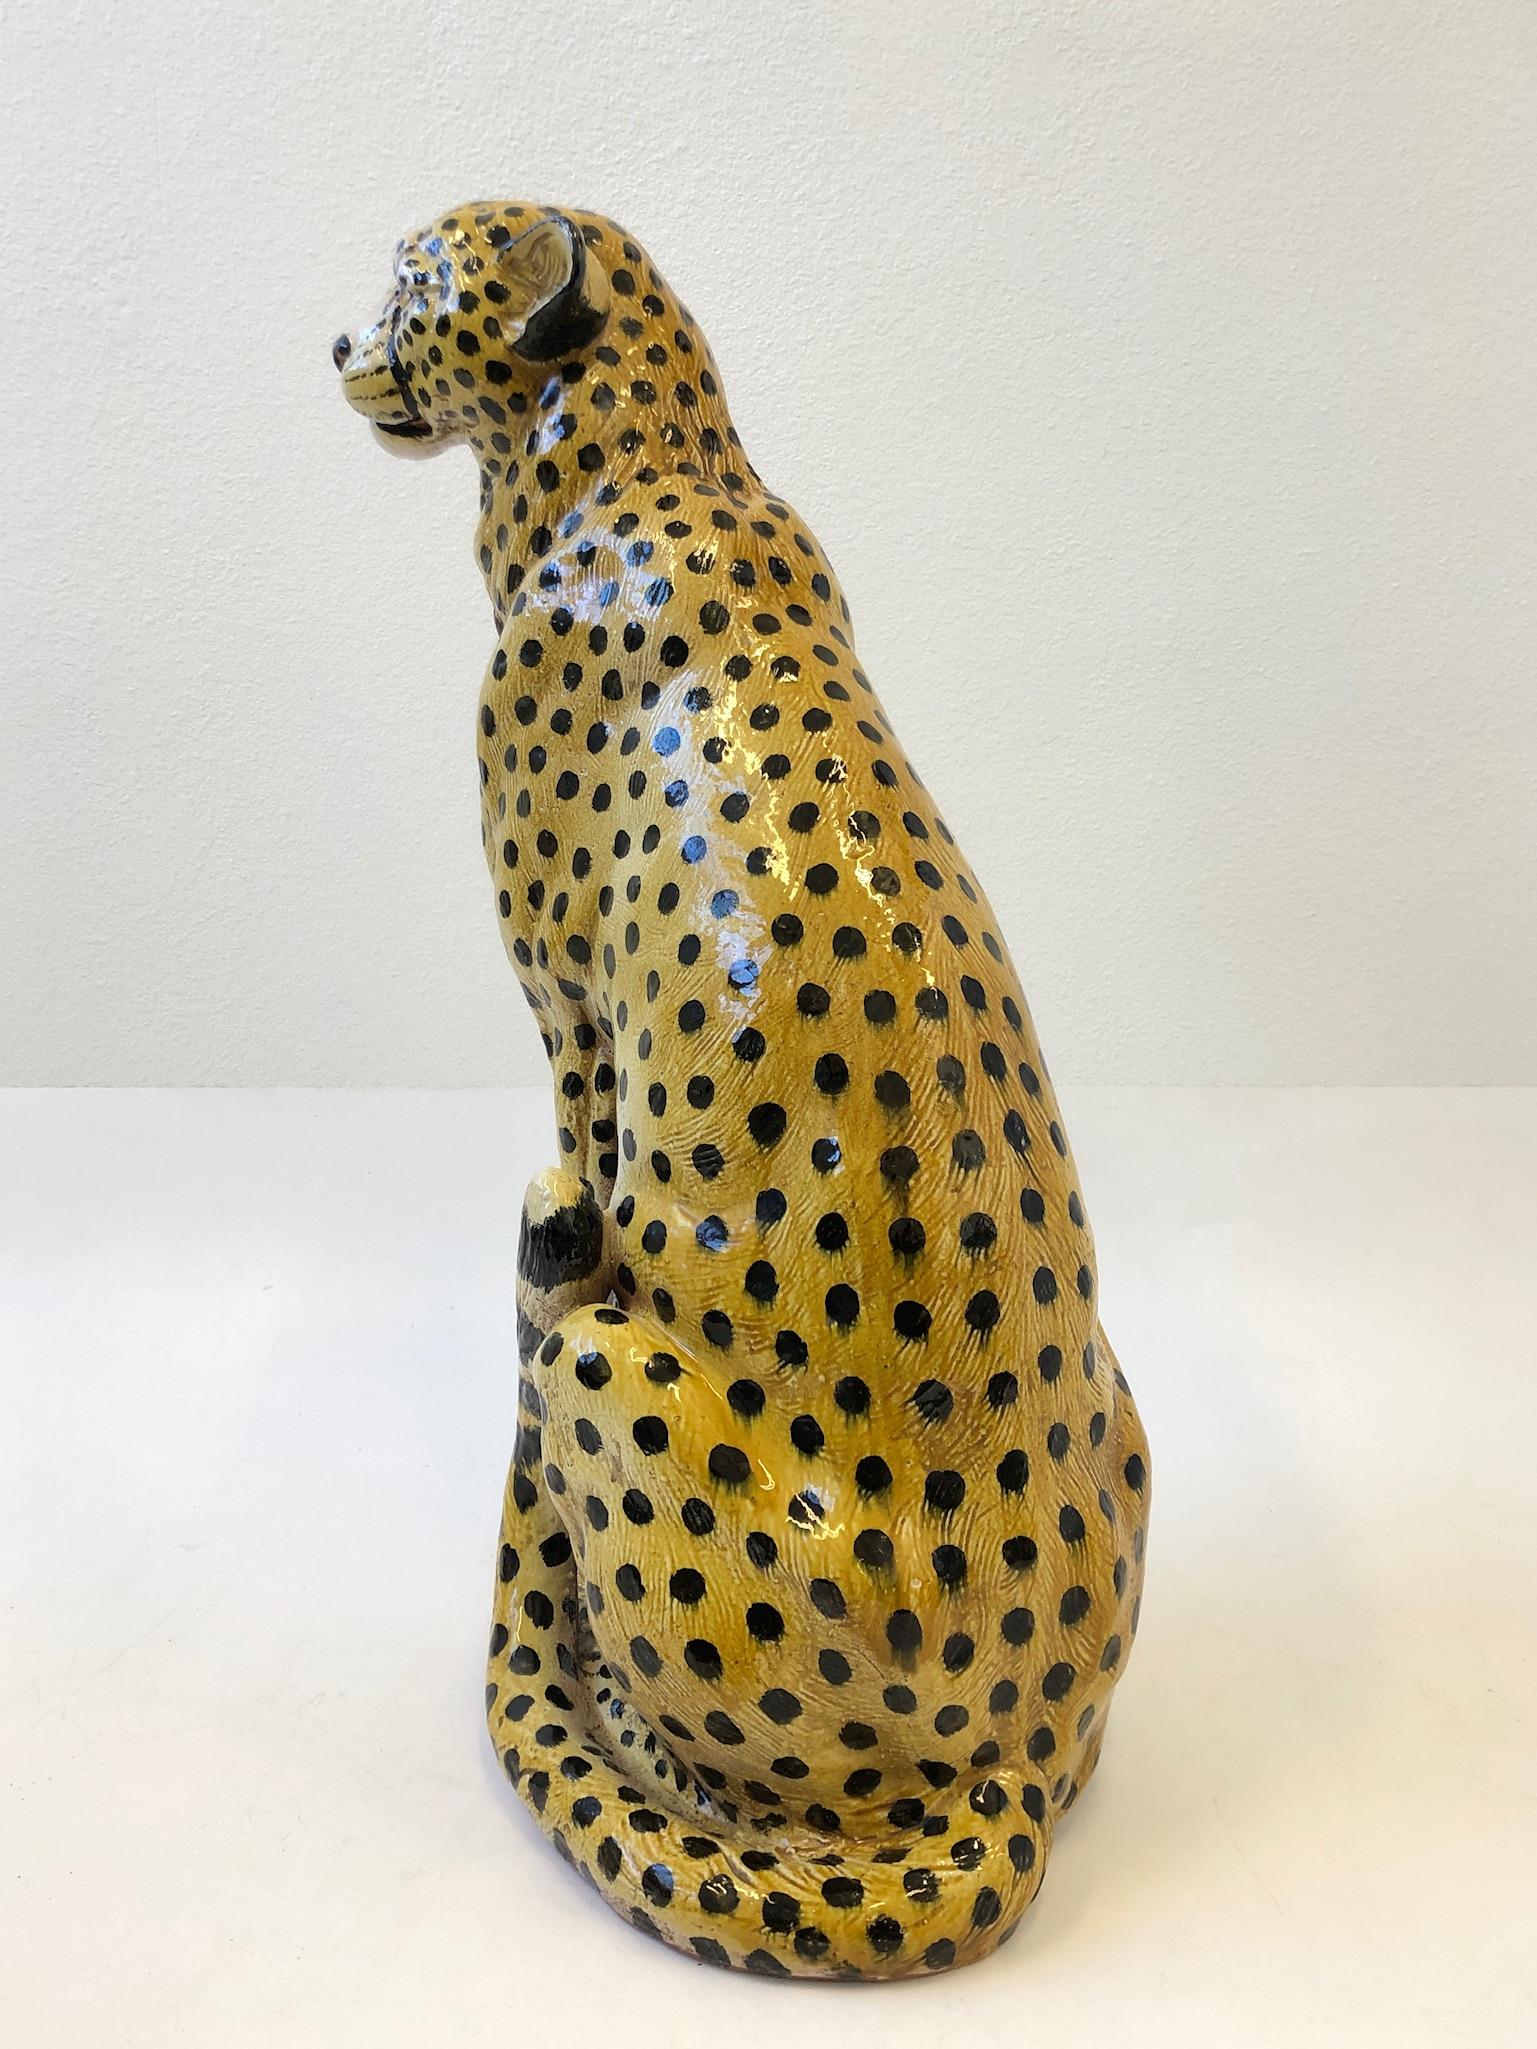 cheetah sculptures